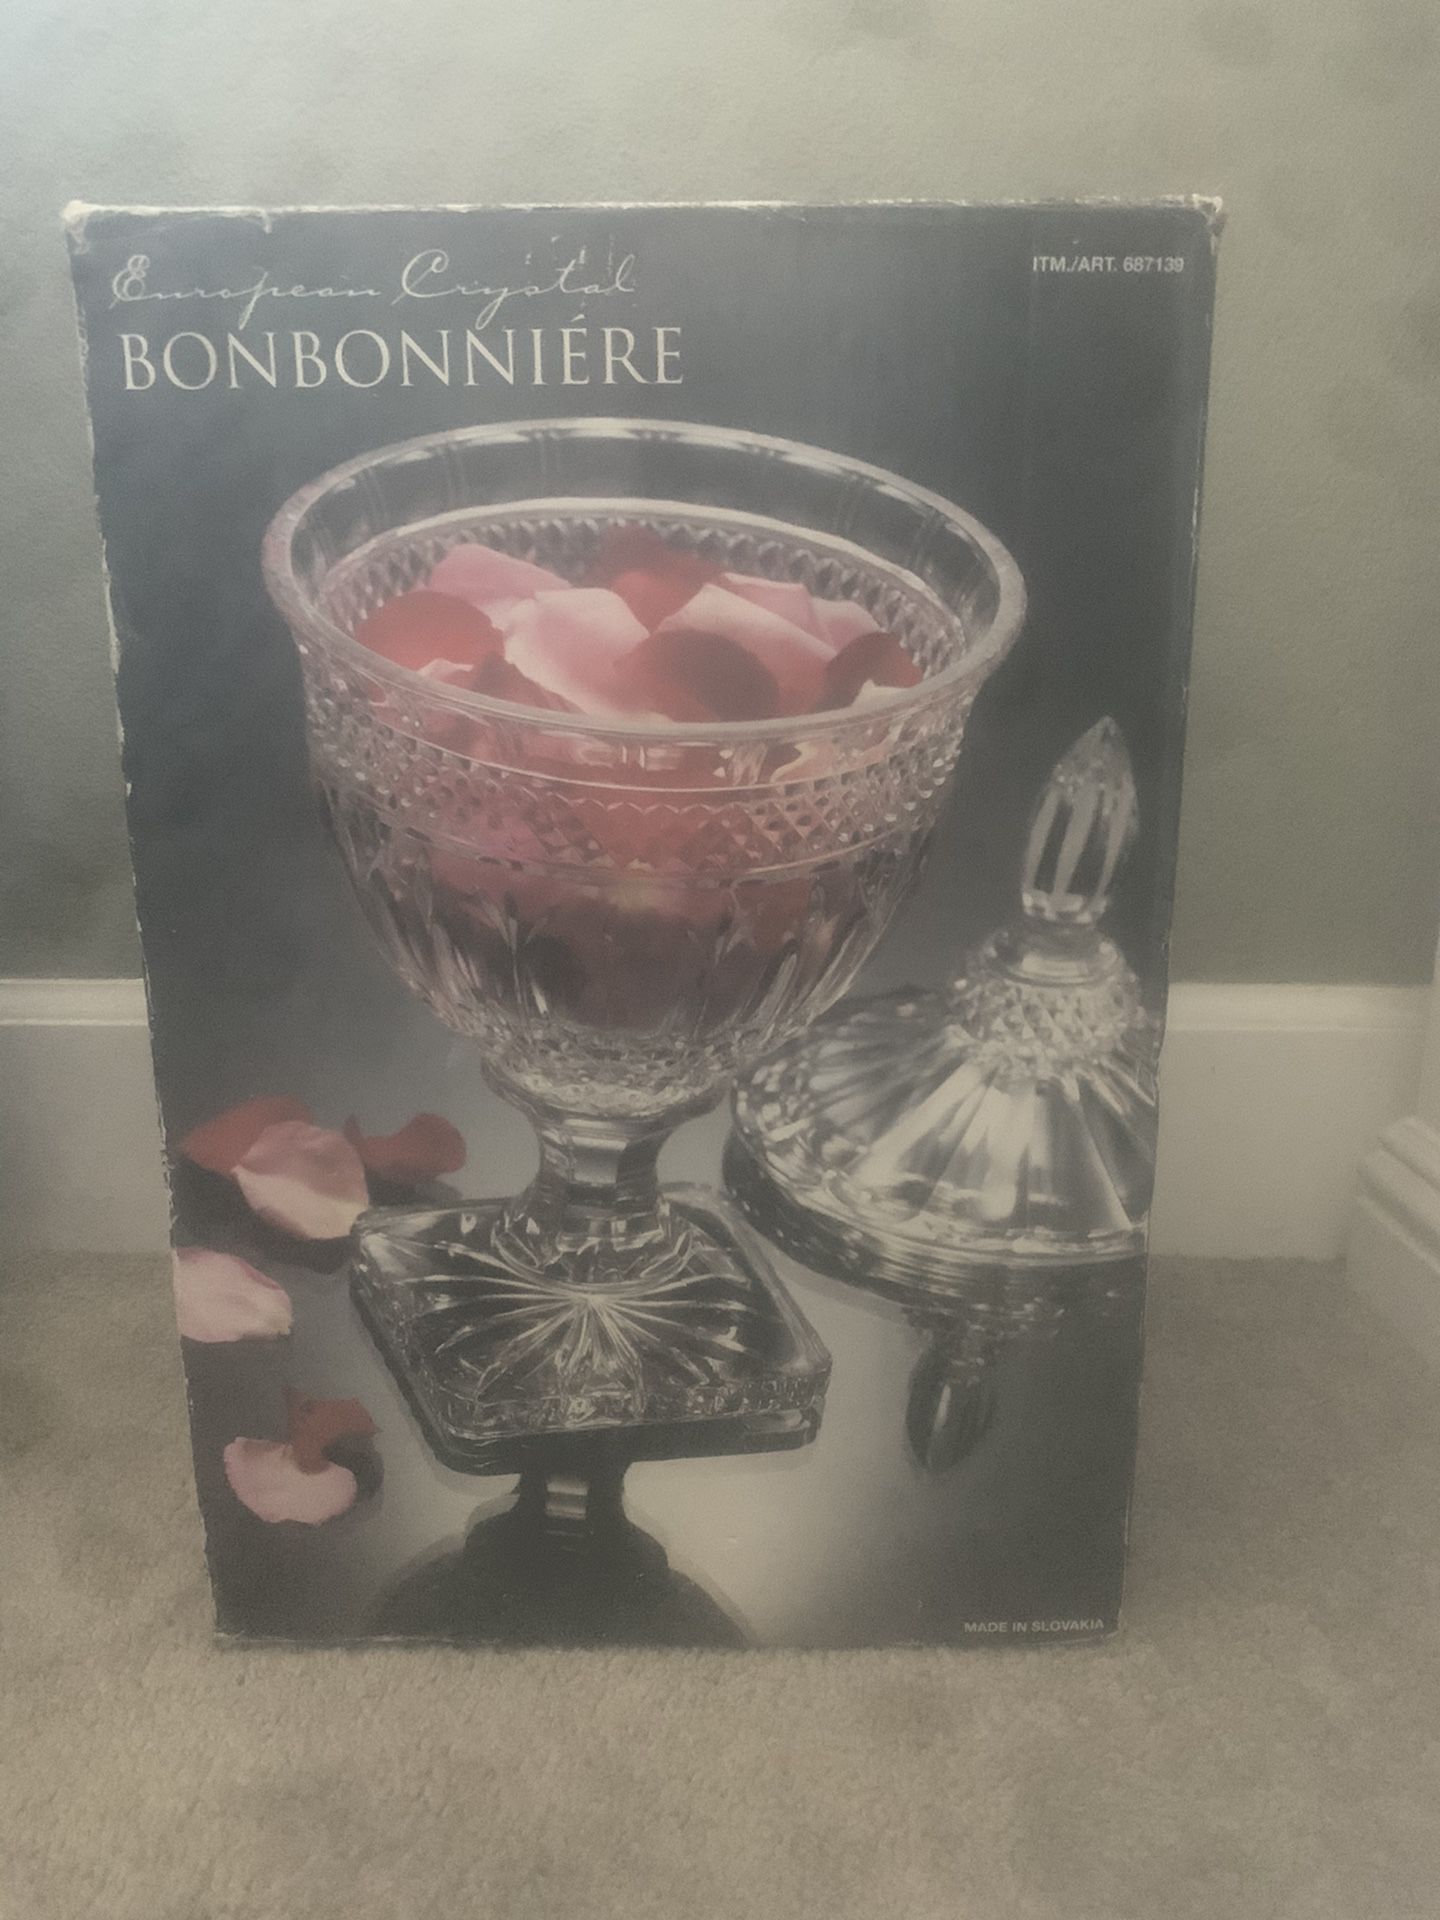 New in Box European Crystal Bonbonniere Candy Dish